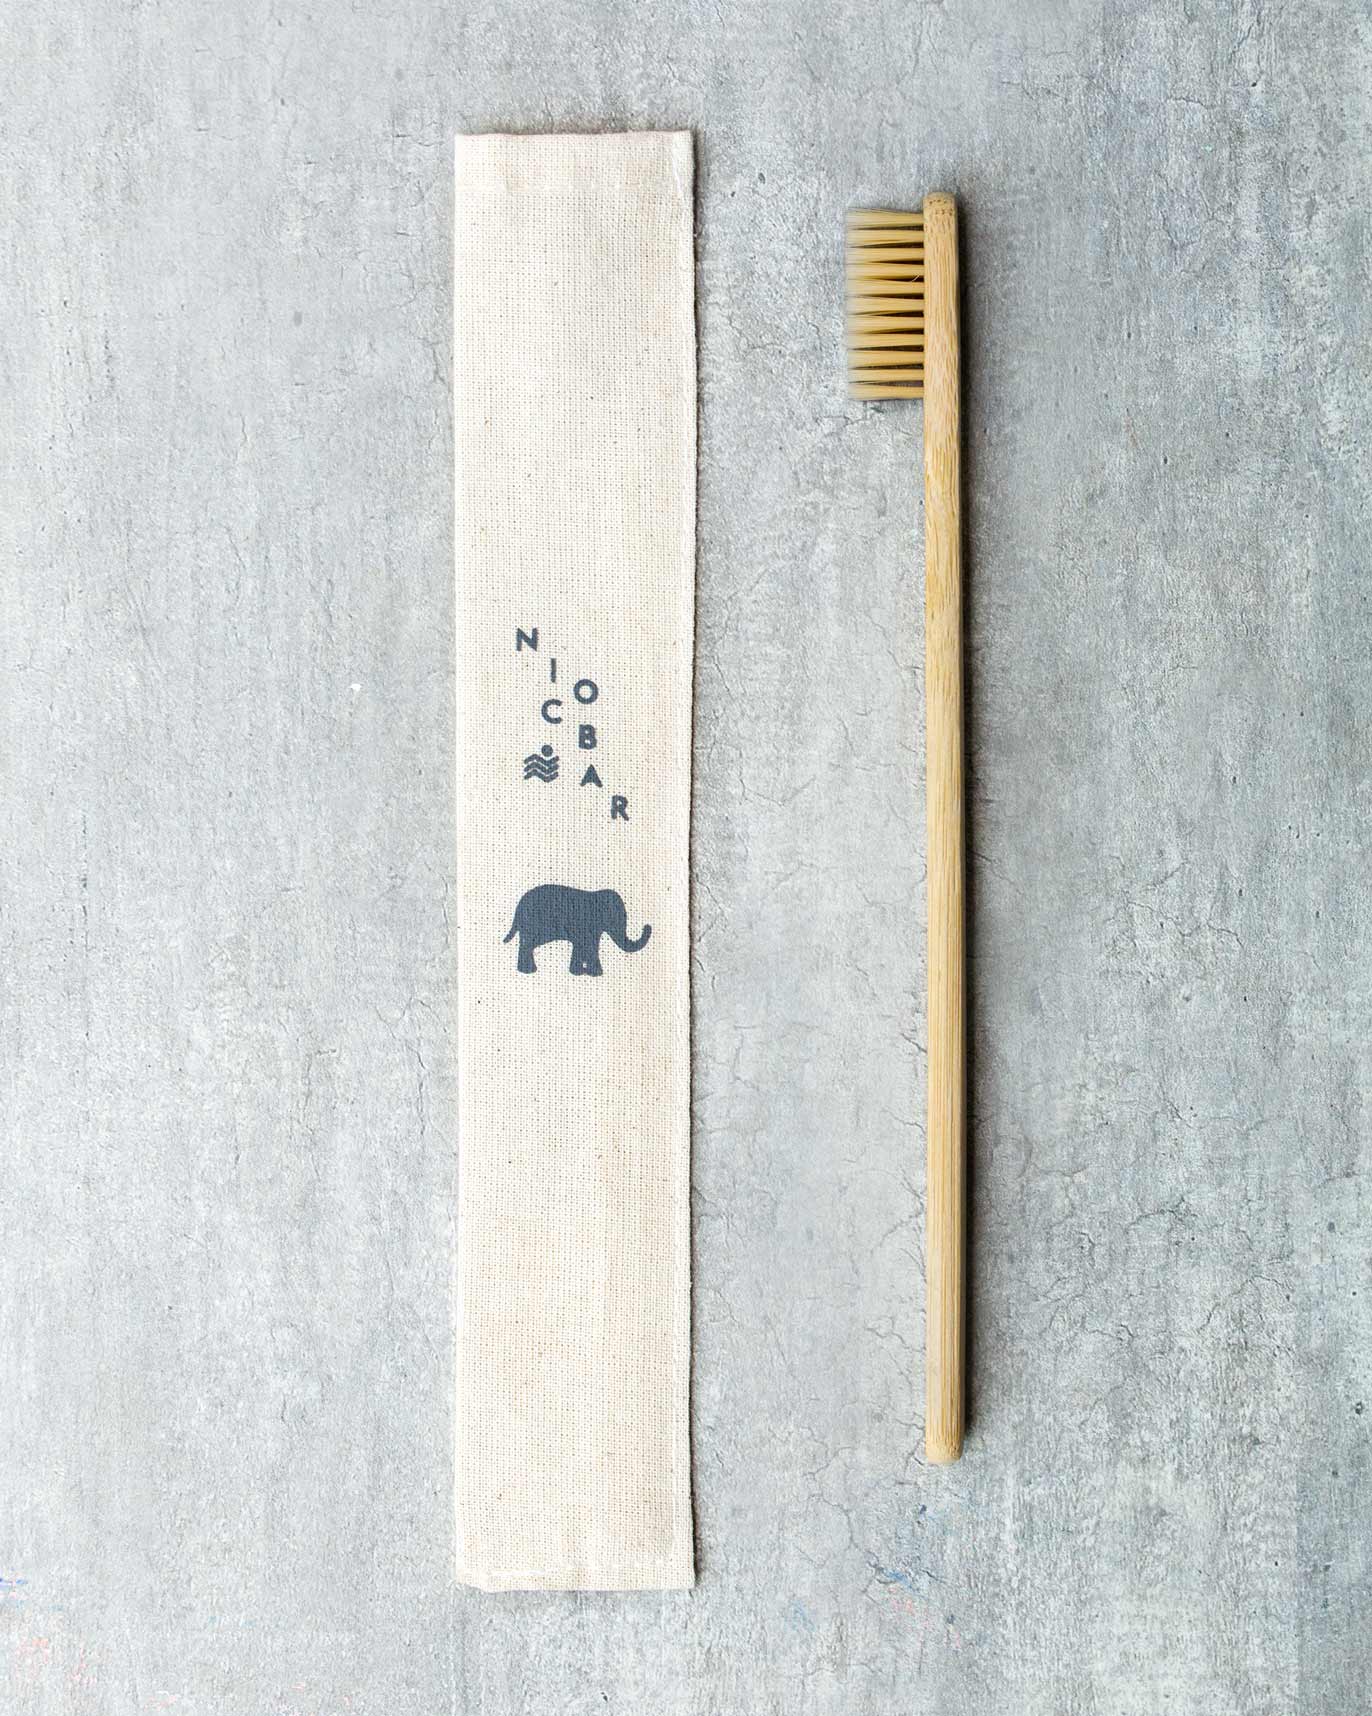 Bamboo Toothbrush - Natural